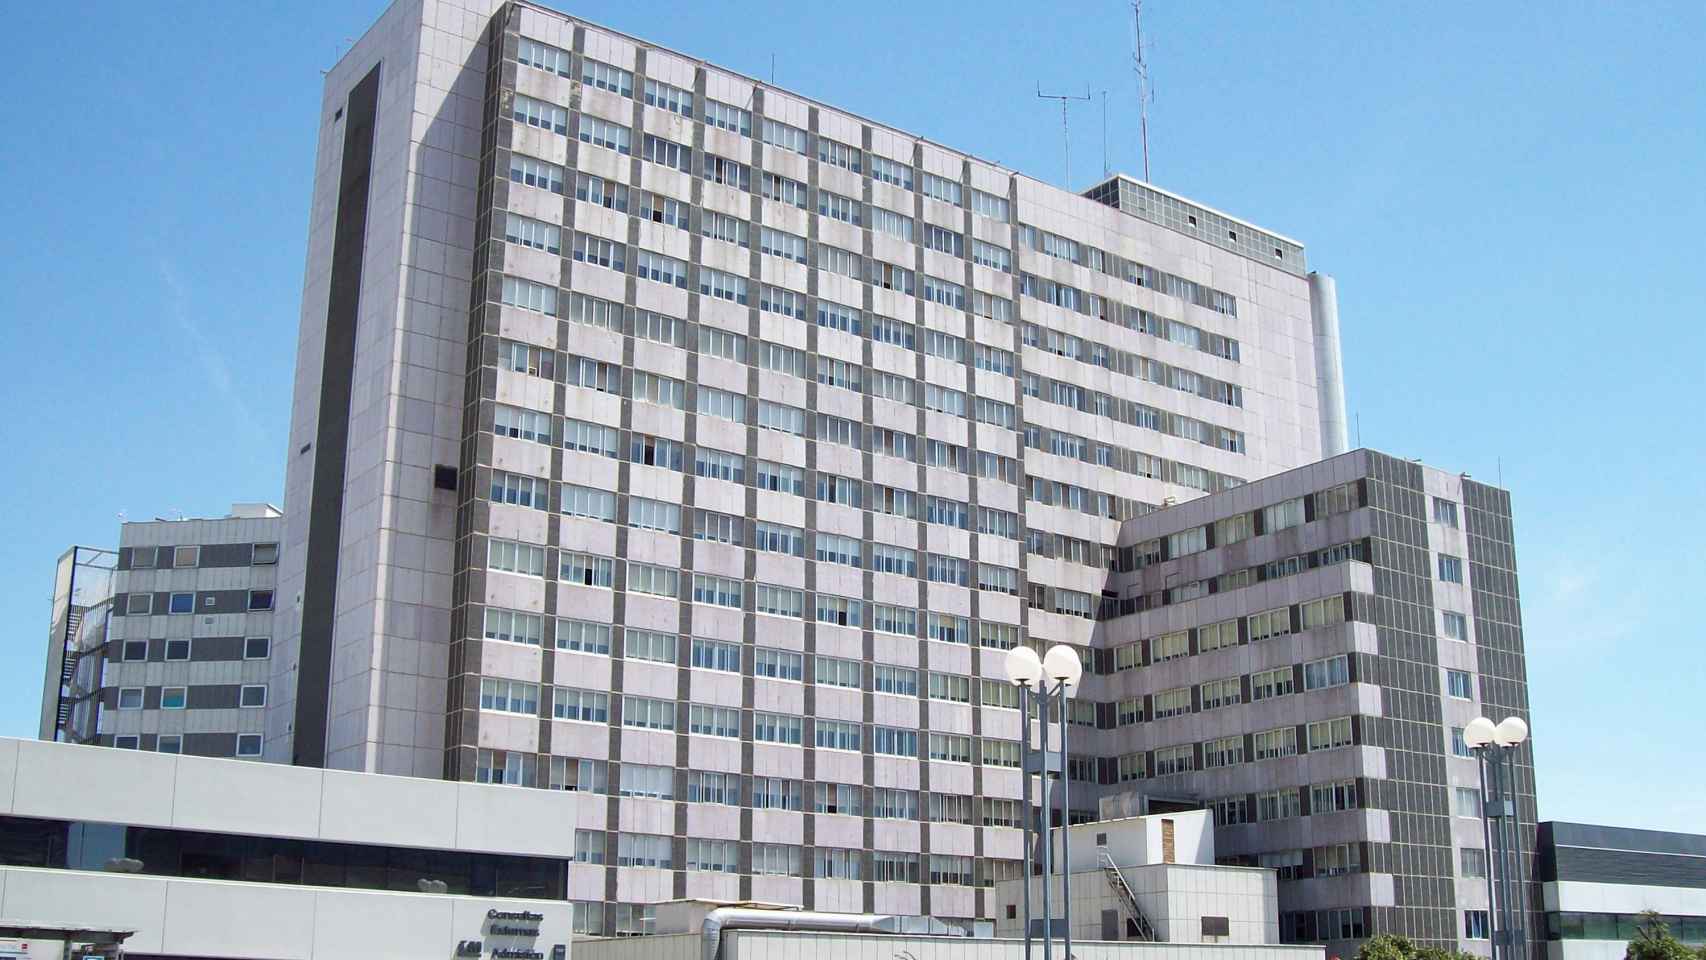 Hospital de La Paz de Madrid.